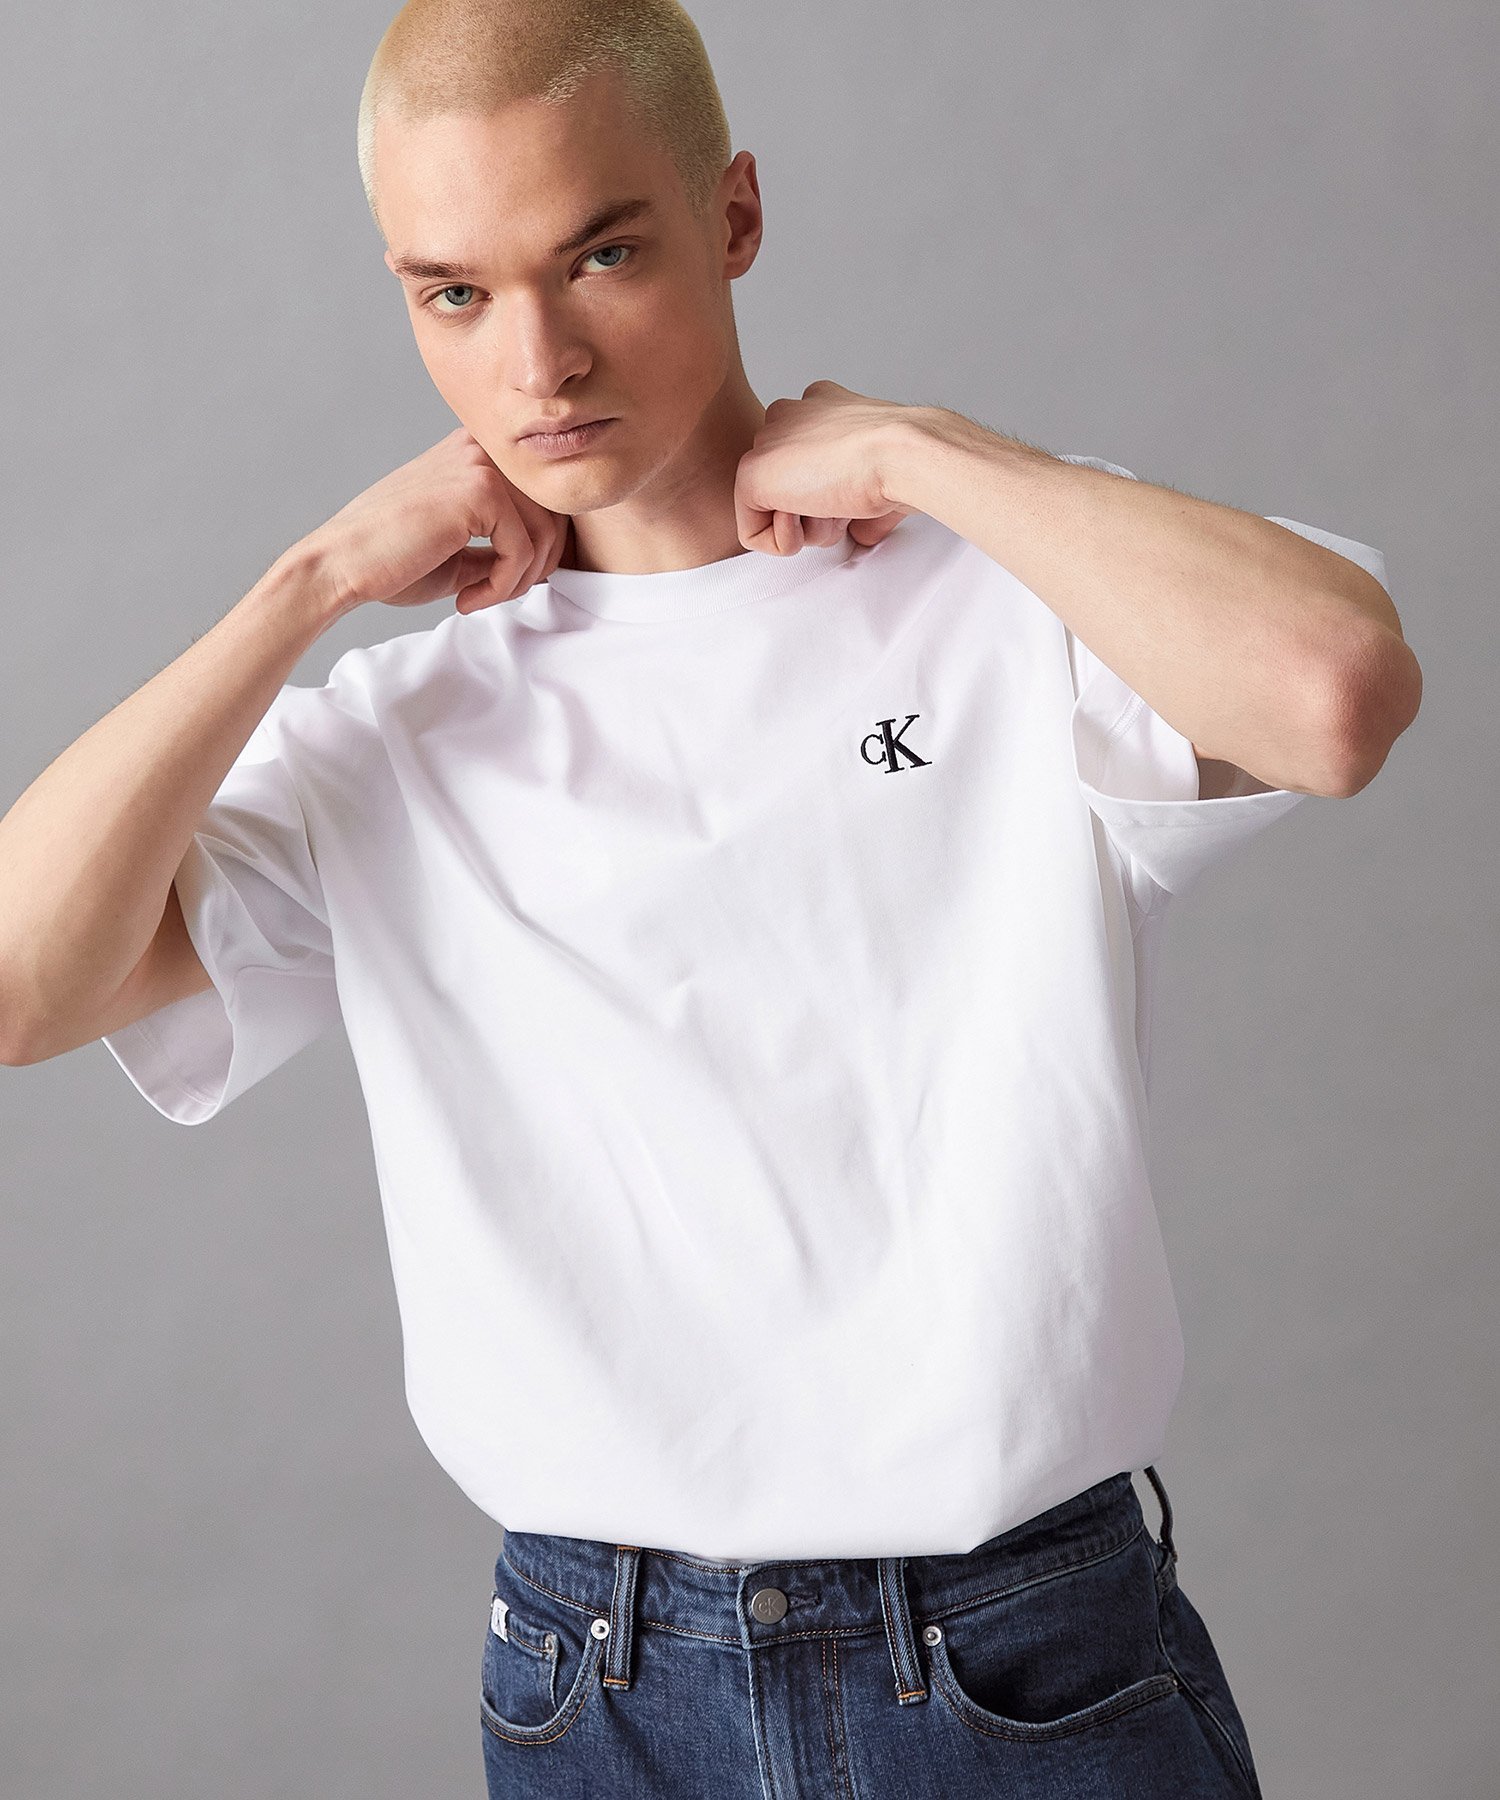 (M)【公式ショップ】 カルバンクライン ユニセックス エンボスロゴ Tシャツ Calvin Klein Jeans J400377